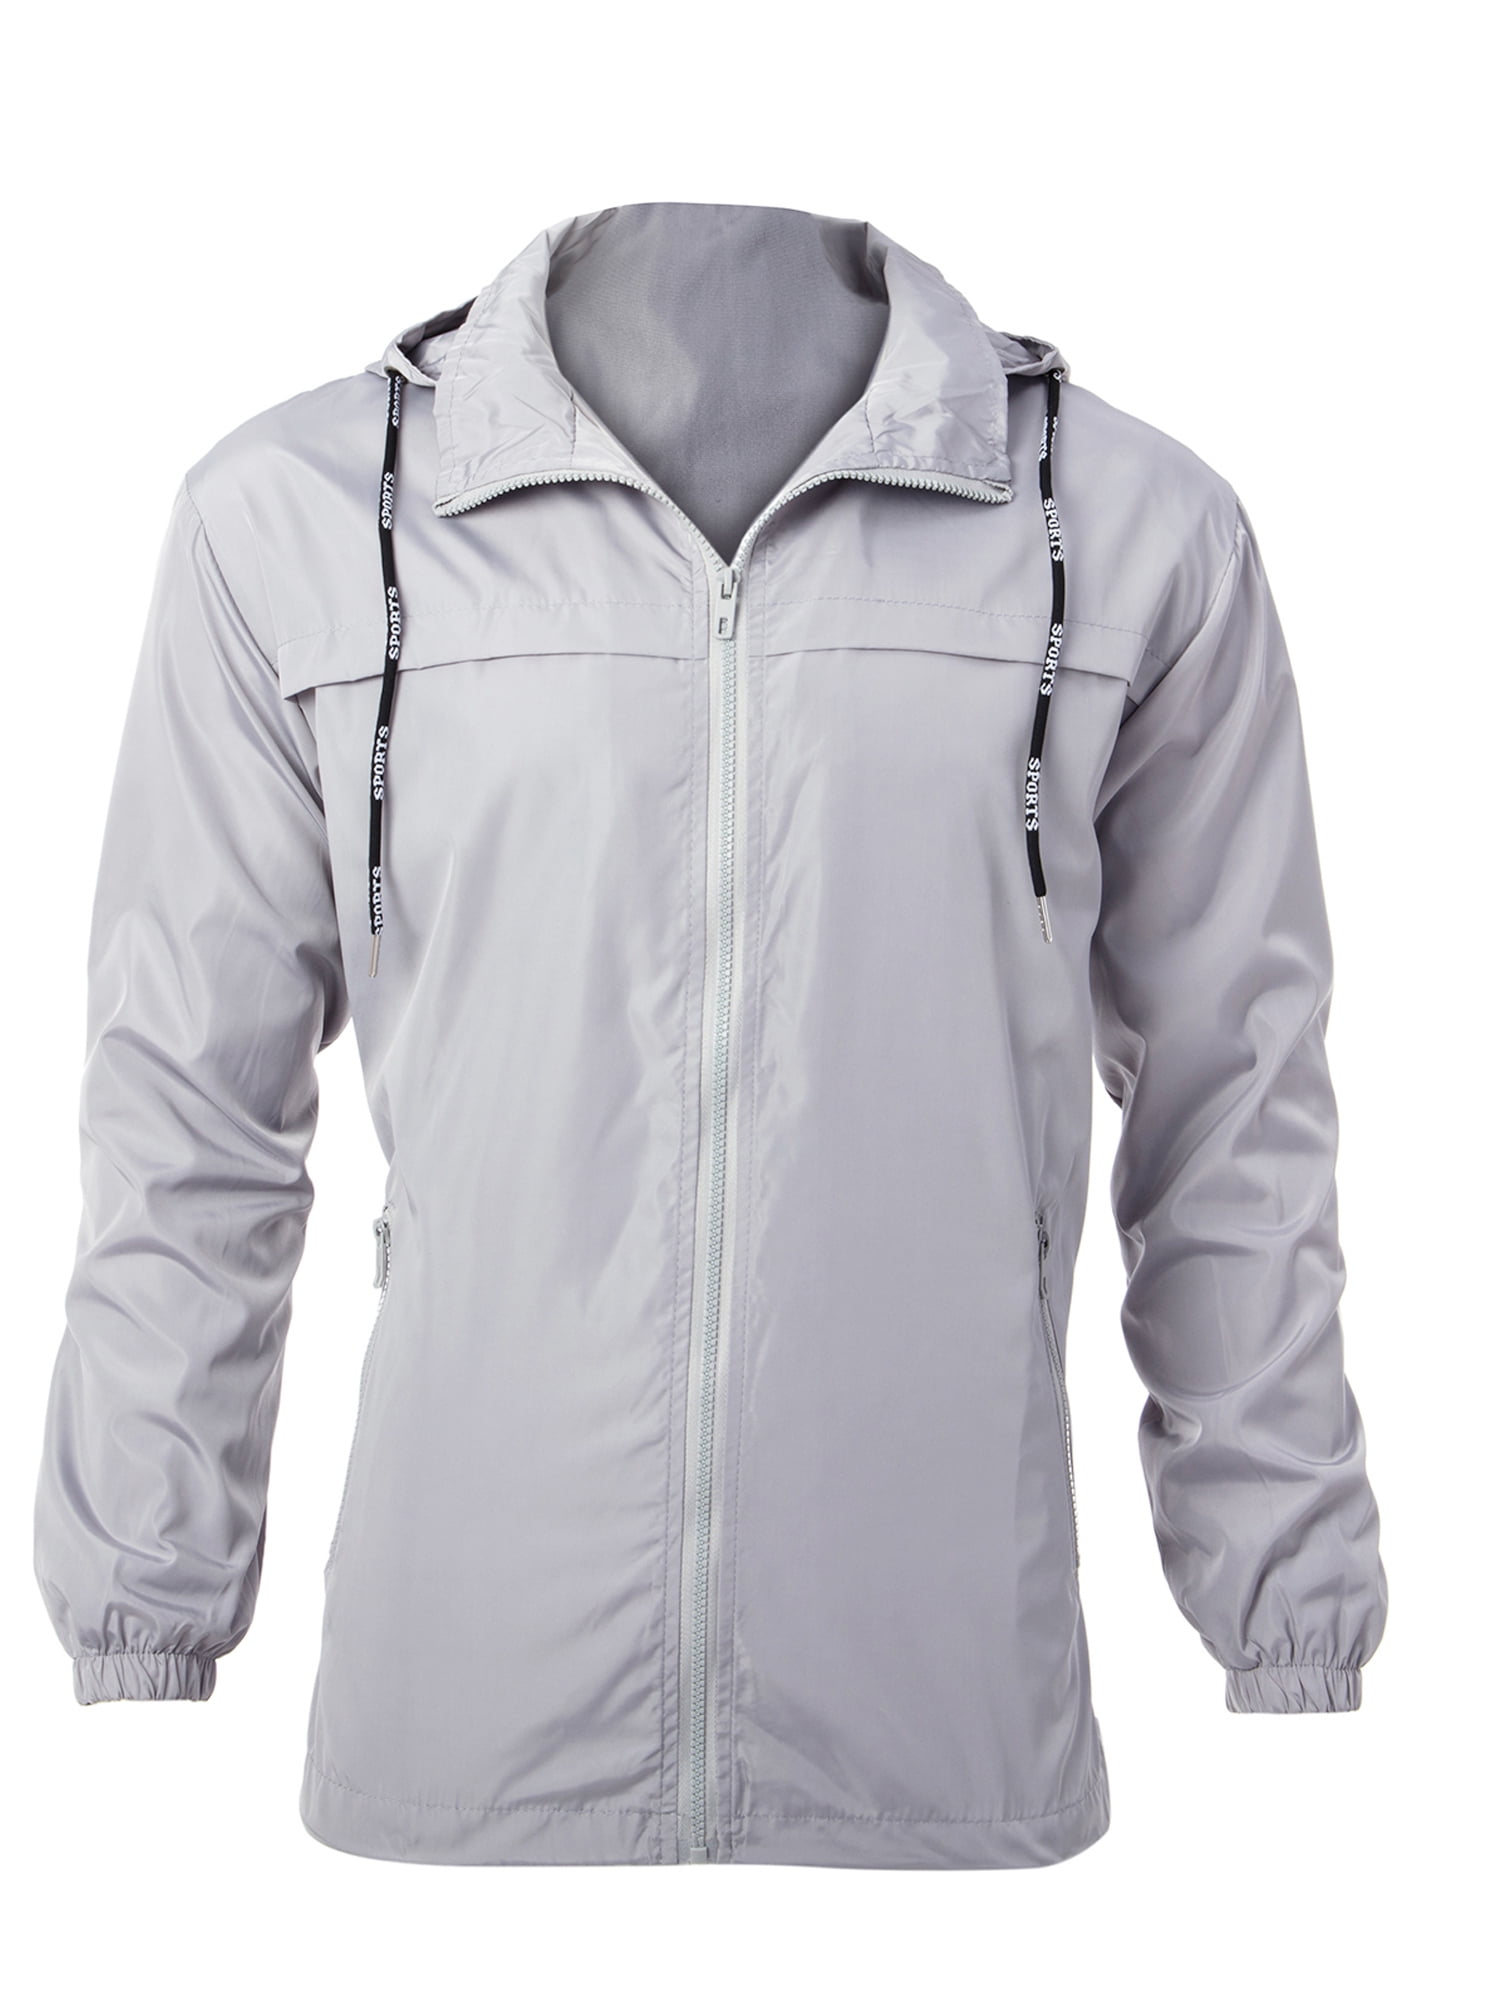 Men/'s Rain Jacket Cycling Running Jackets Women/'s Waterproof Raincoat with Hood Windbreaker Hiking Jacket Rain Coat